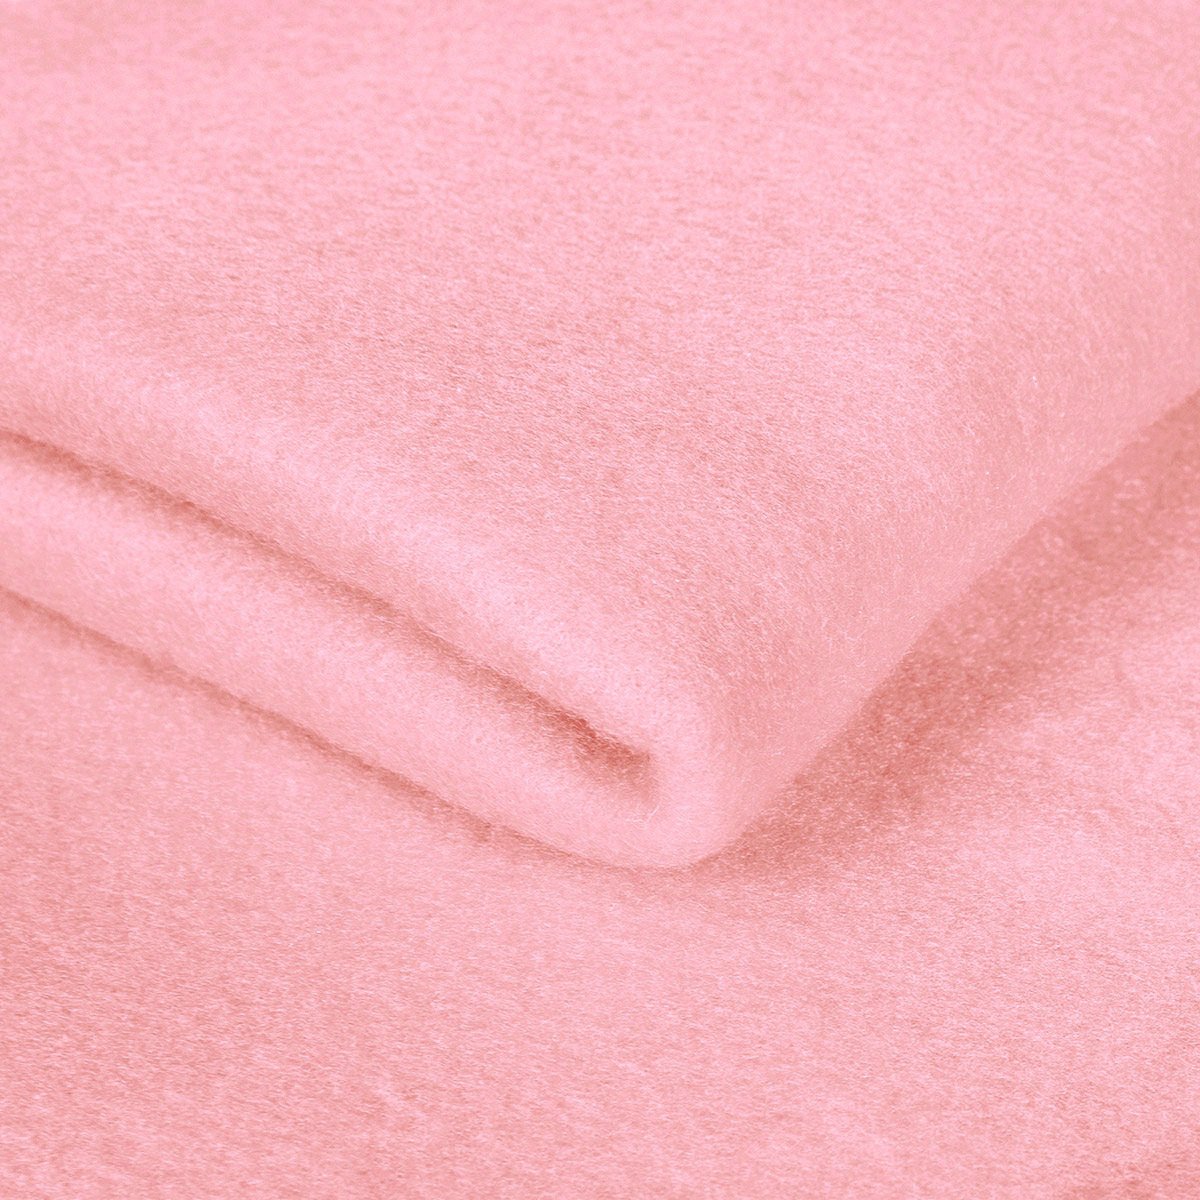 Candy Pink Polar Fleece Fabric